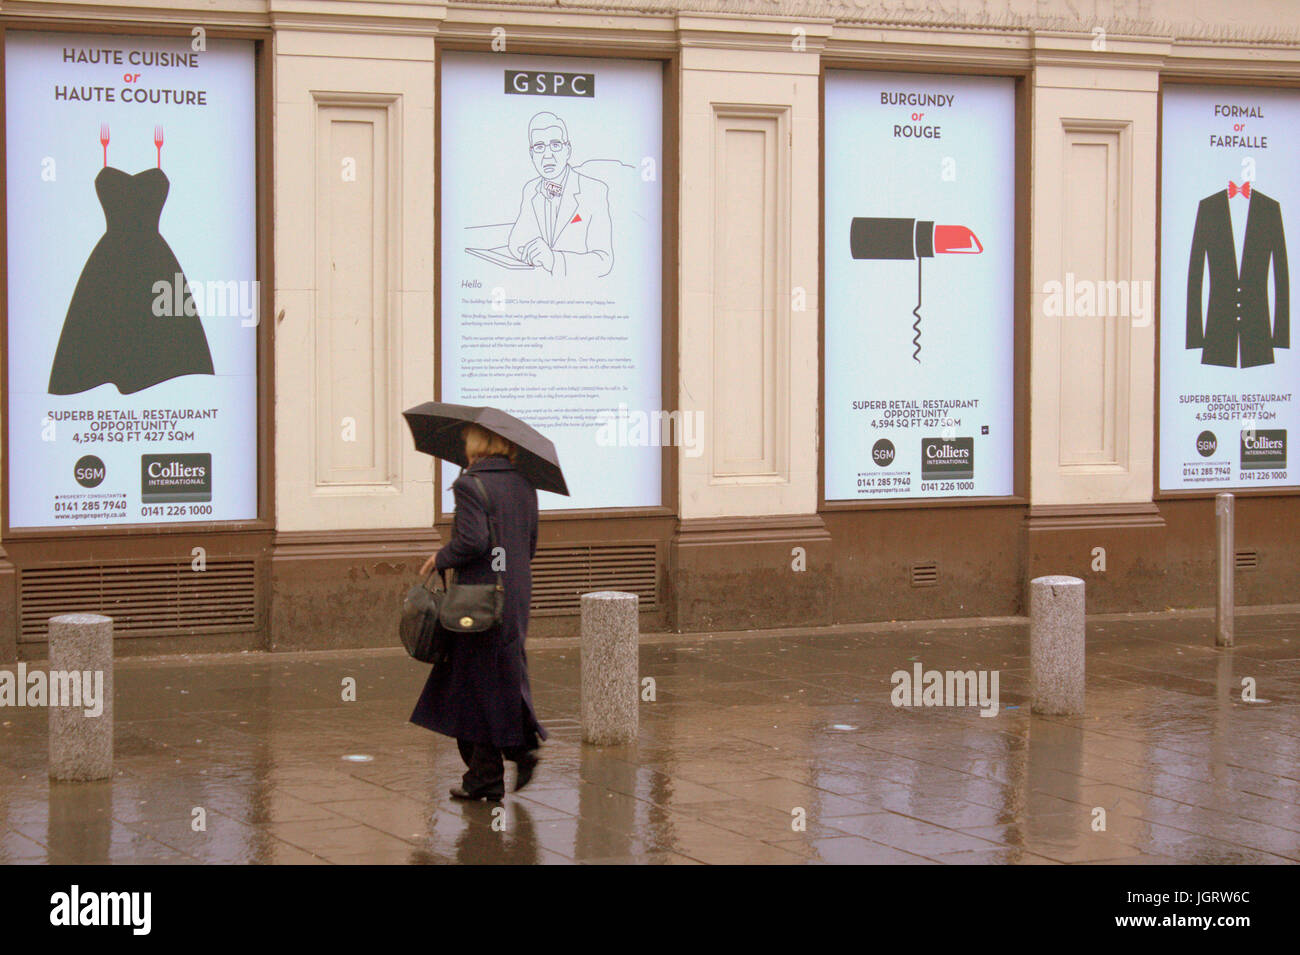 single fashionable woman  raining in Glasgow with umbrella on the street wet rain day brollies billboards fashion adverts Stock Photo